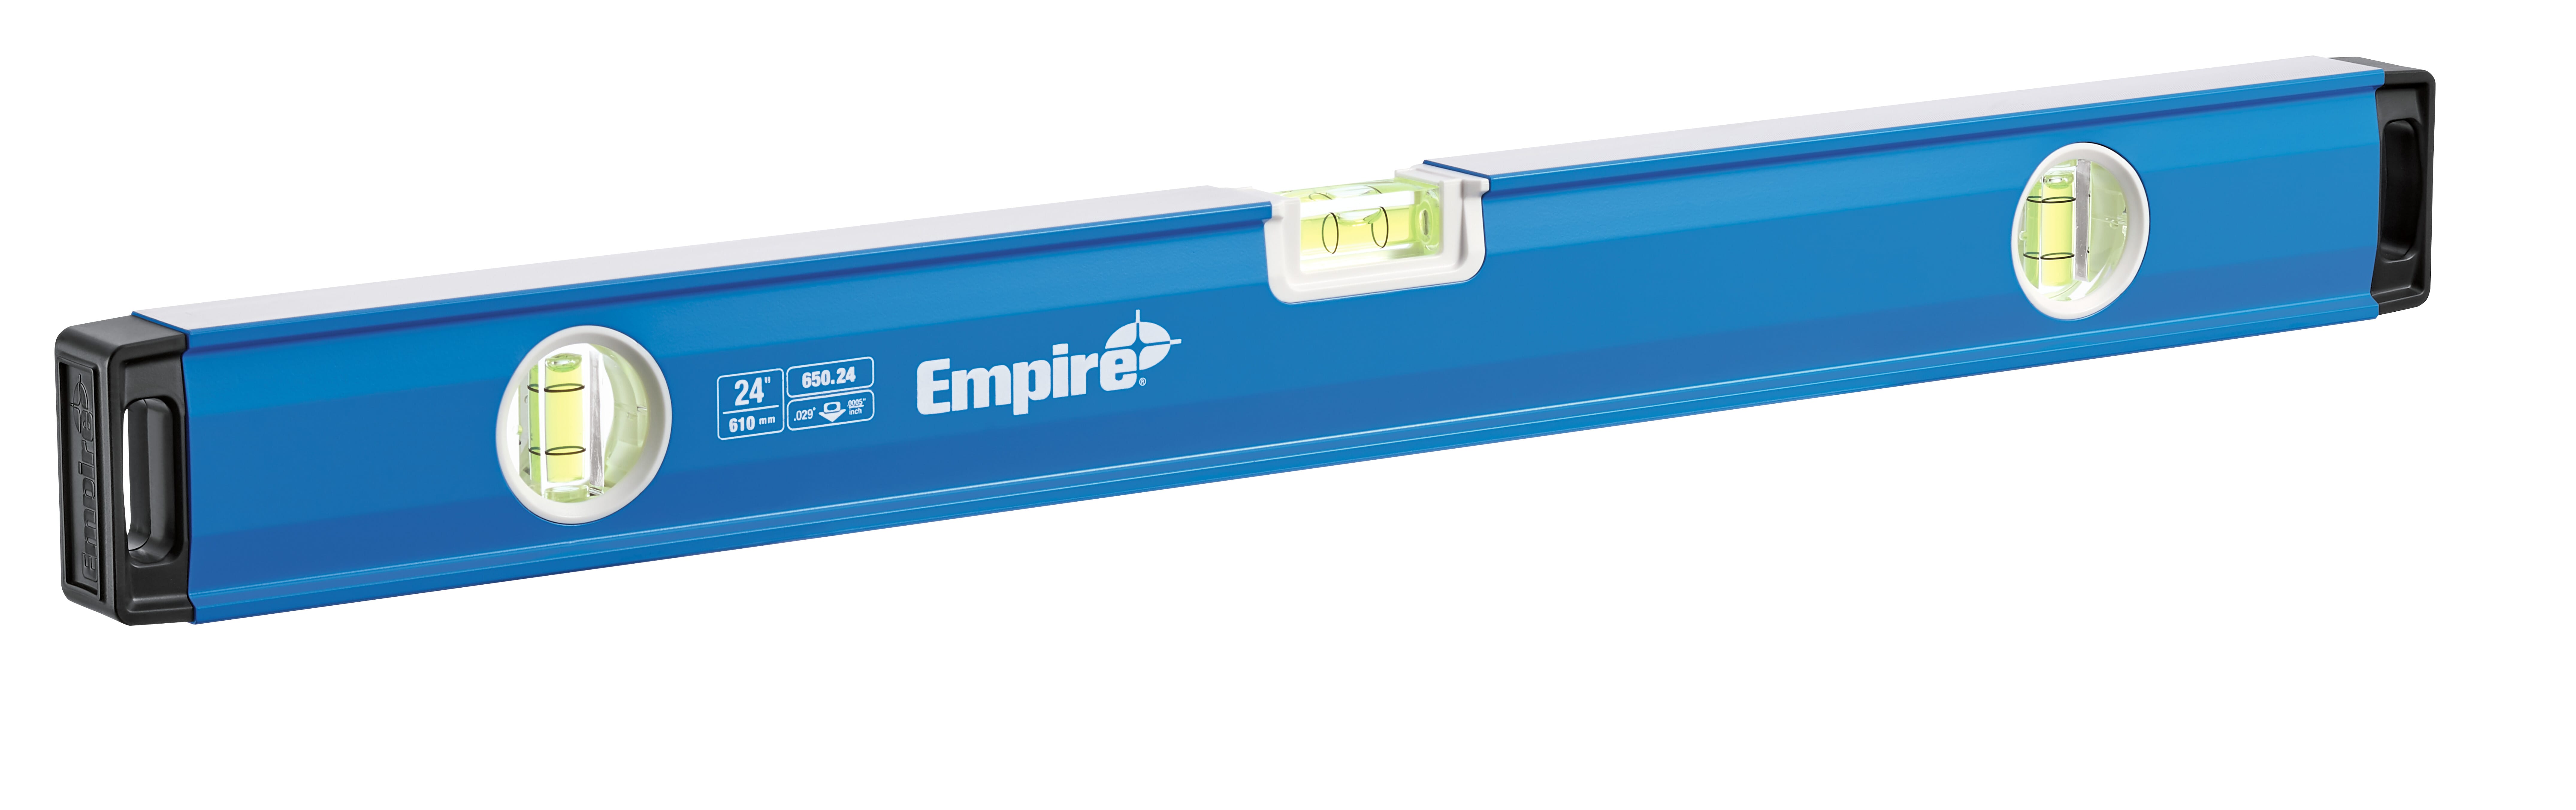 Milwaukee® Empire® 650.24 650 Compact Box Level, 24 in L, 3 Vials, Aluminum, 0.0005 in Accuracy